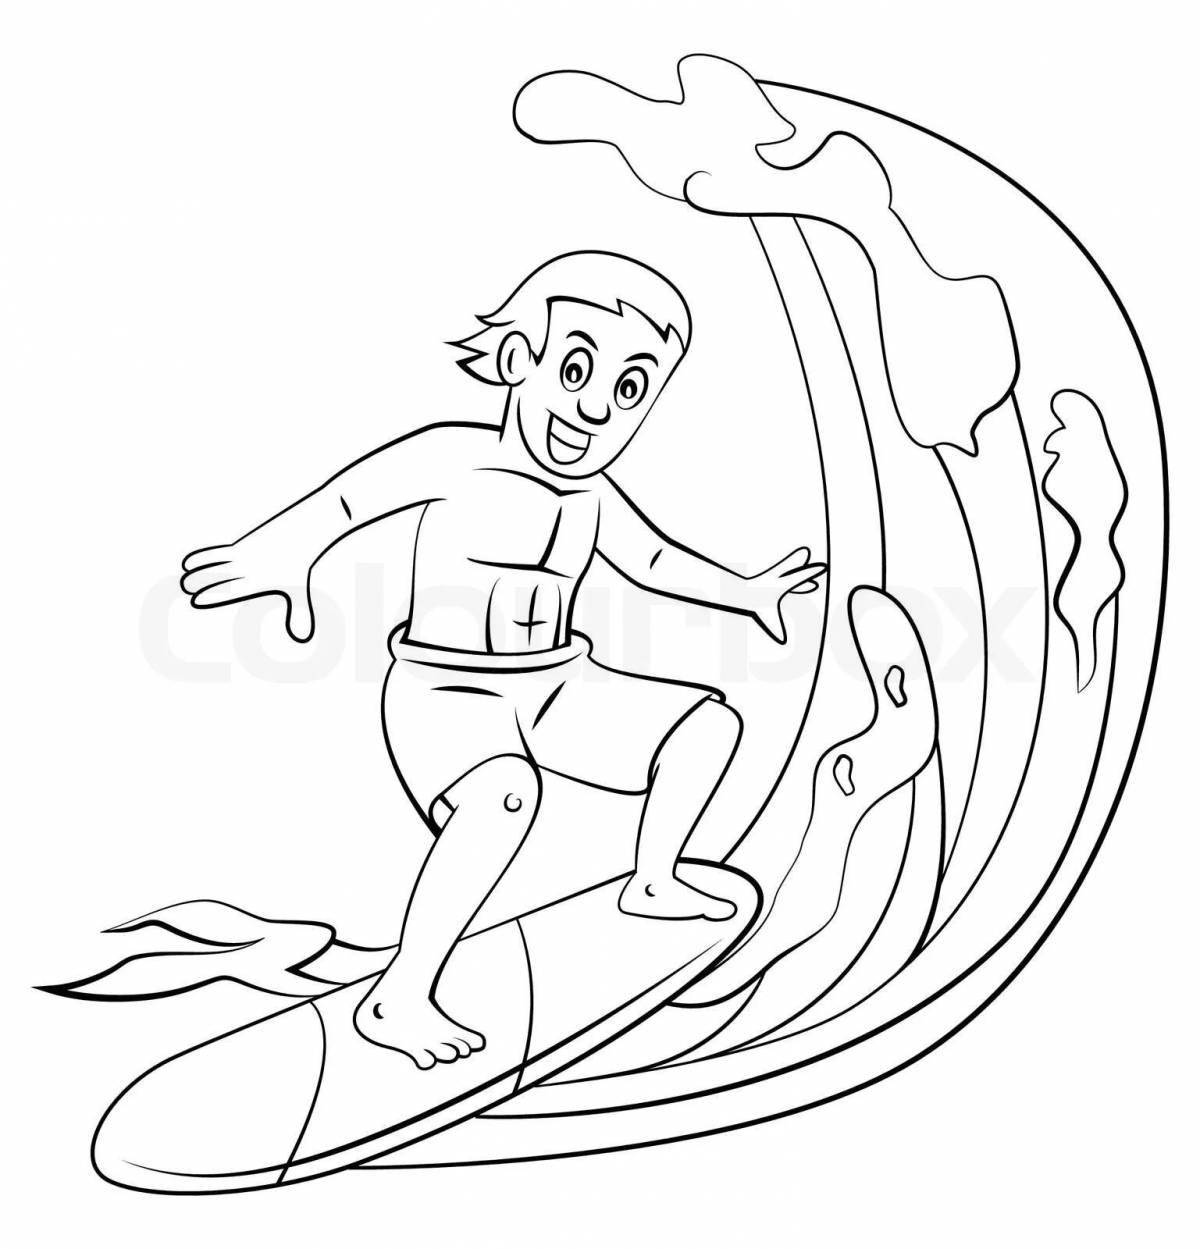 Fun surf coloring book